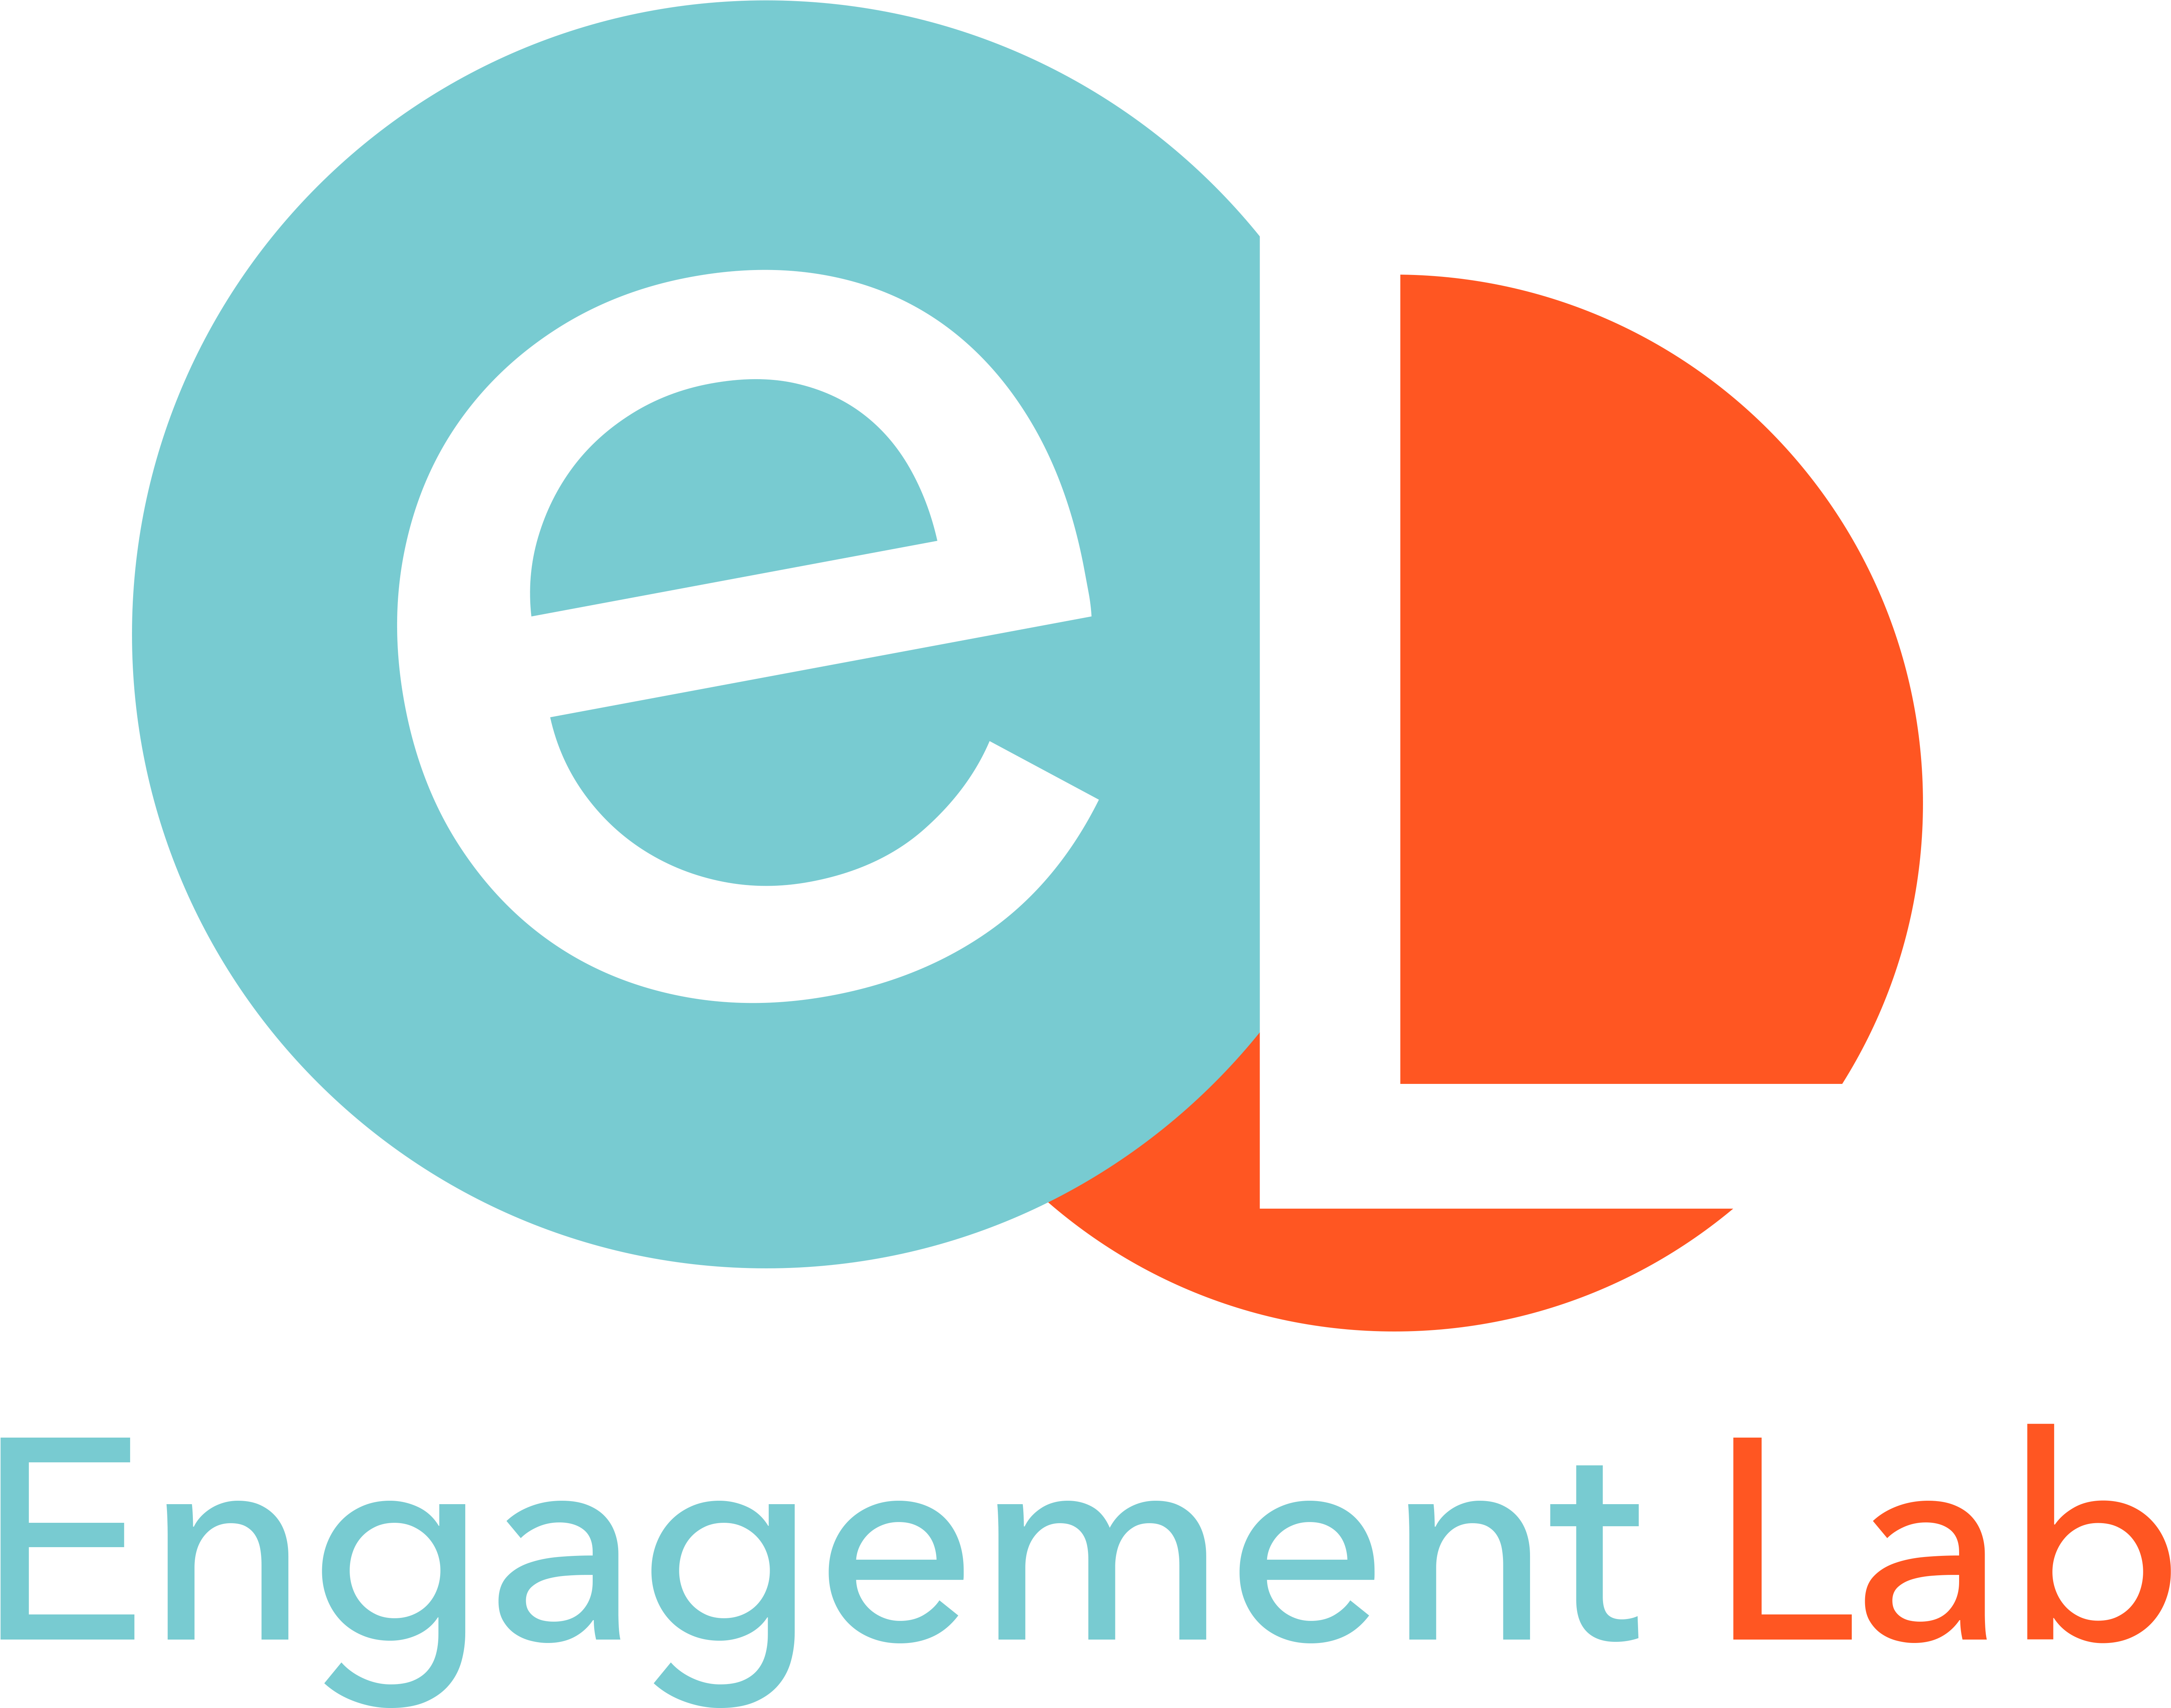 Engagement Lab Logo - Solvay Brussels School Of Economics (6000x4600)